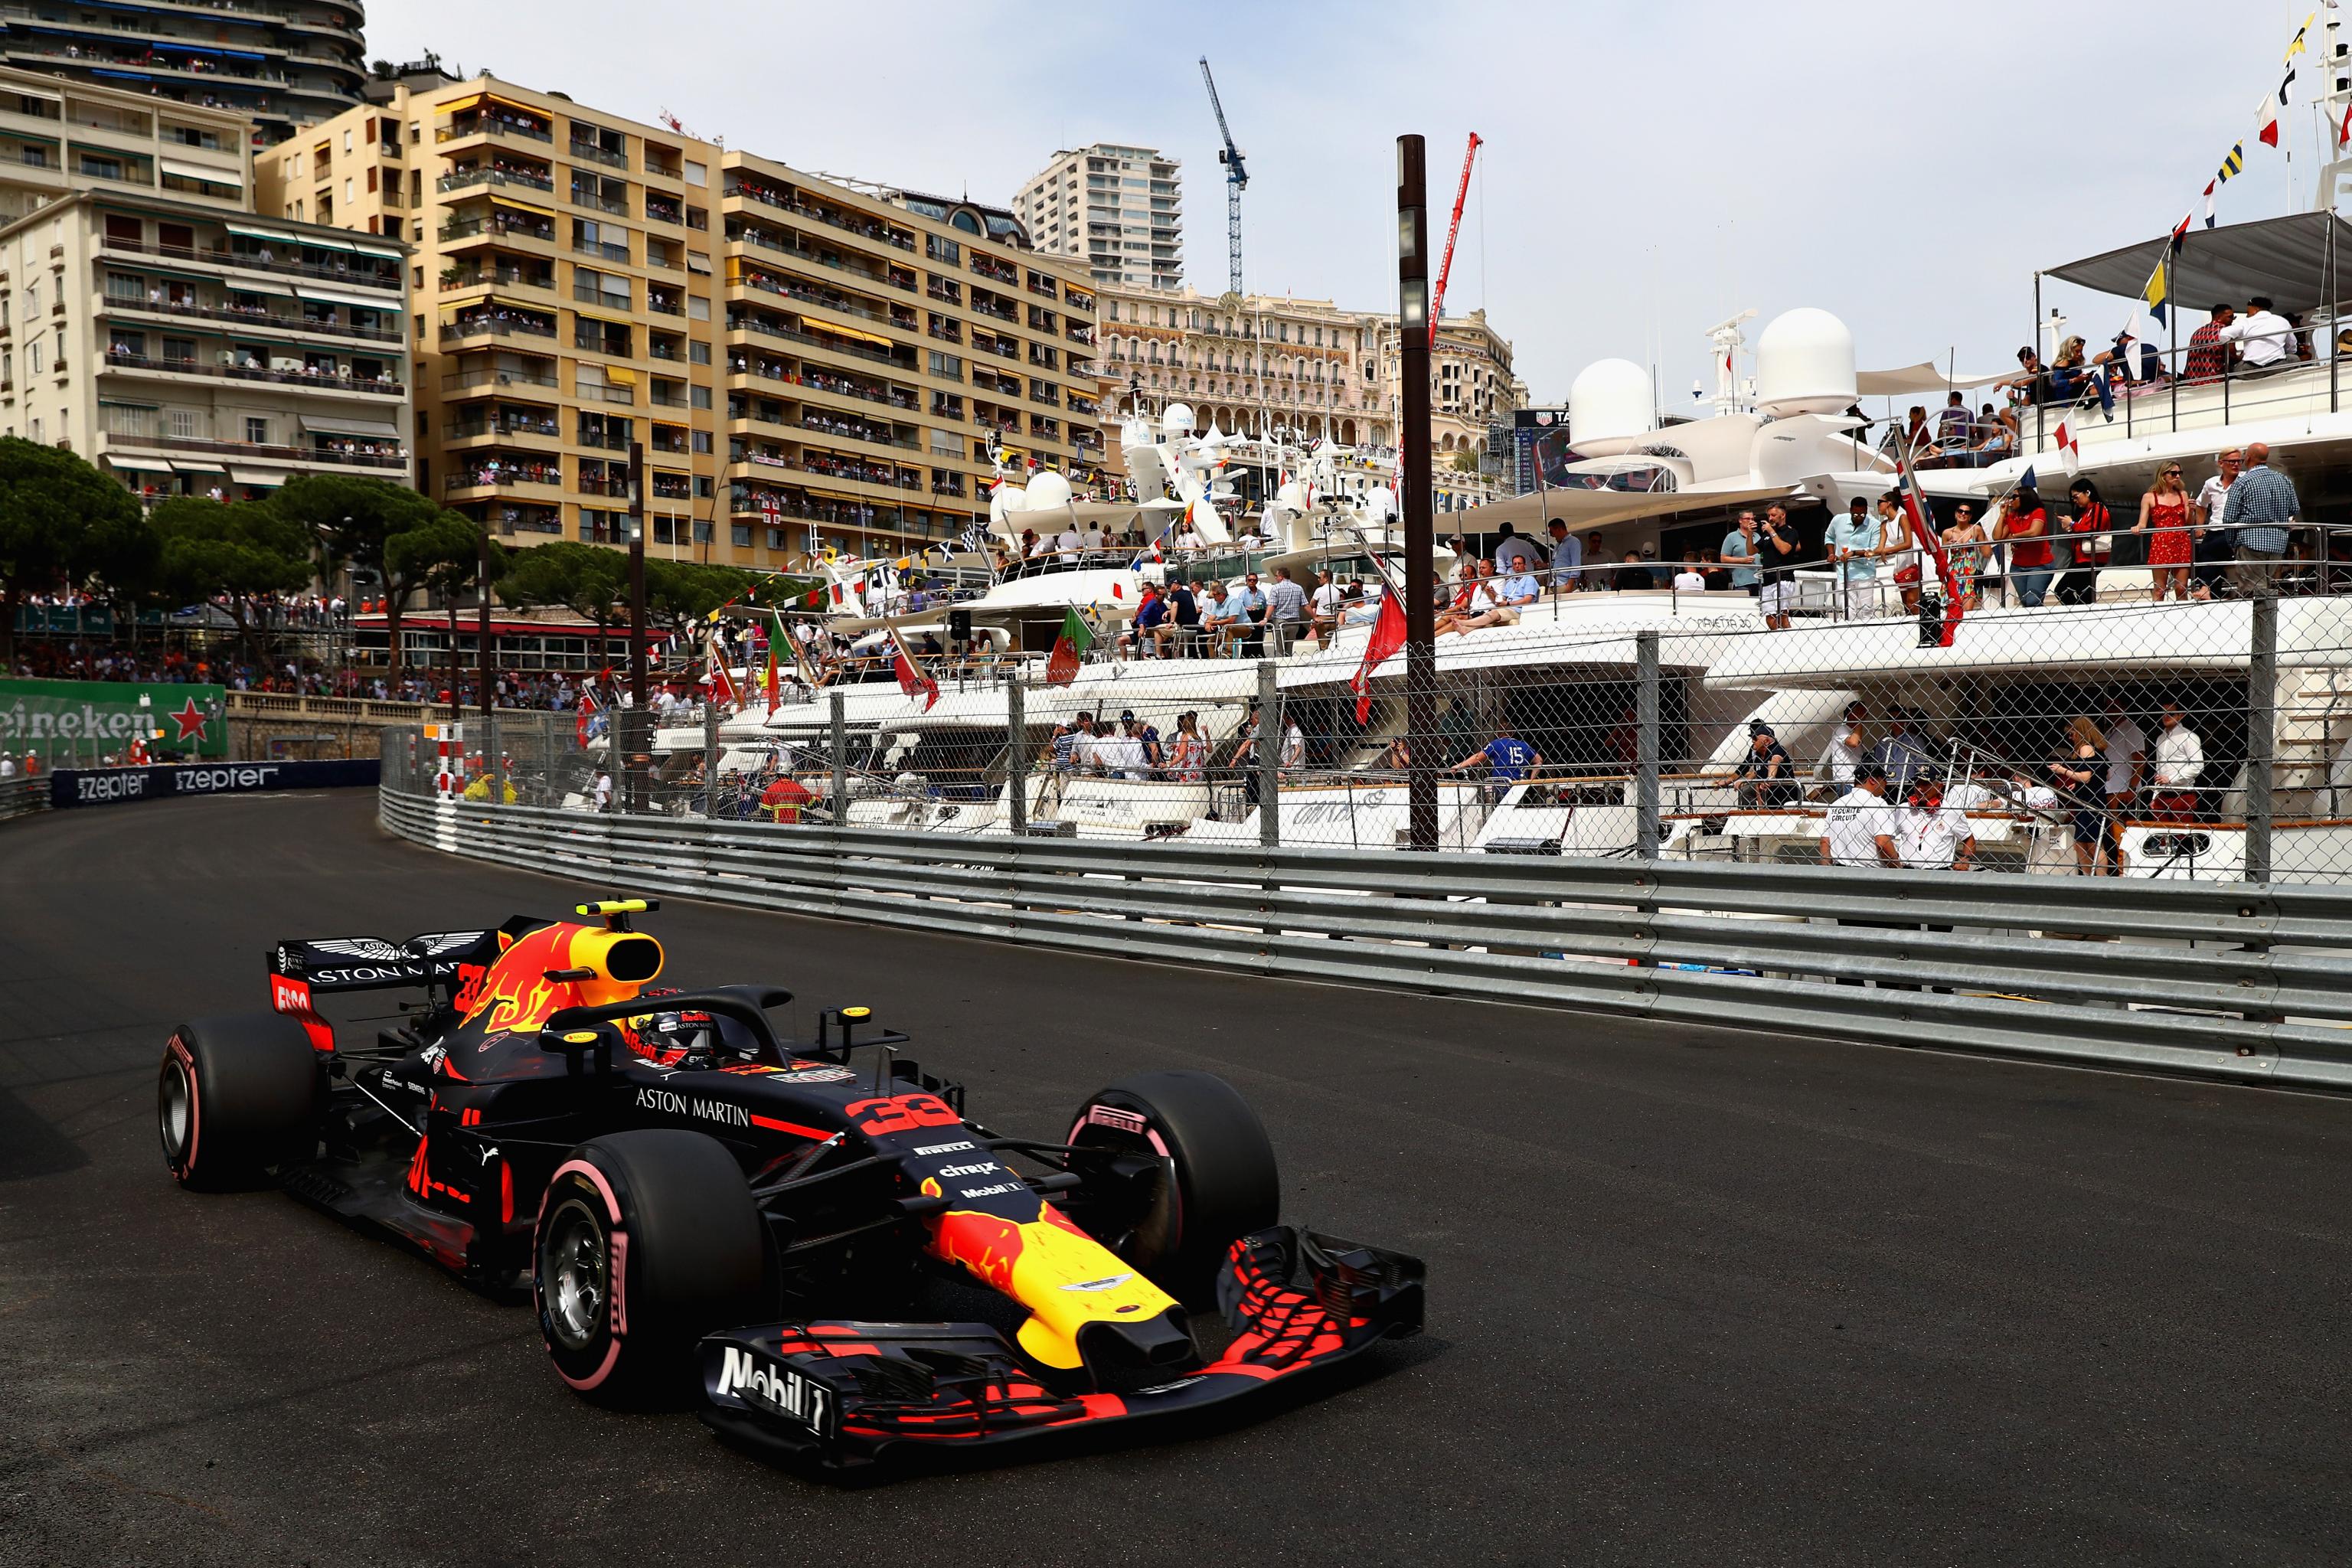 Monaco F1 Grand Prix 2018 Results Daniel Ricciardo Tops Sebastian